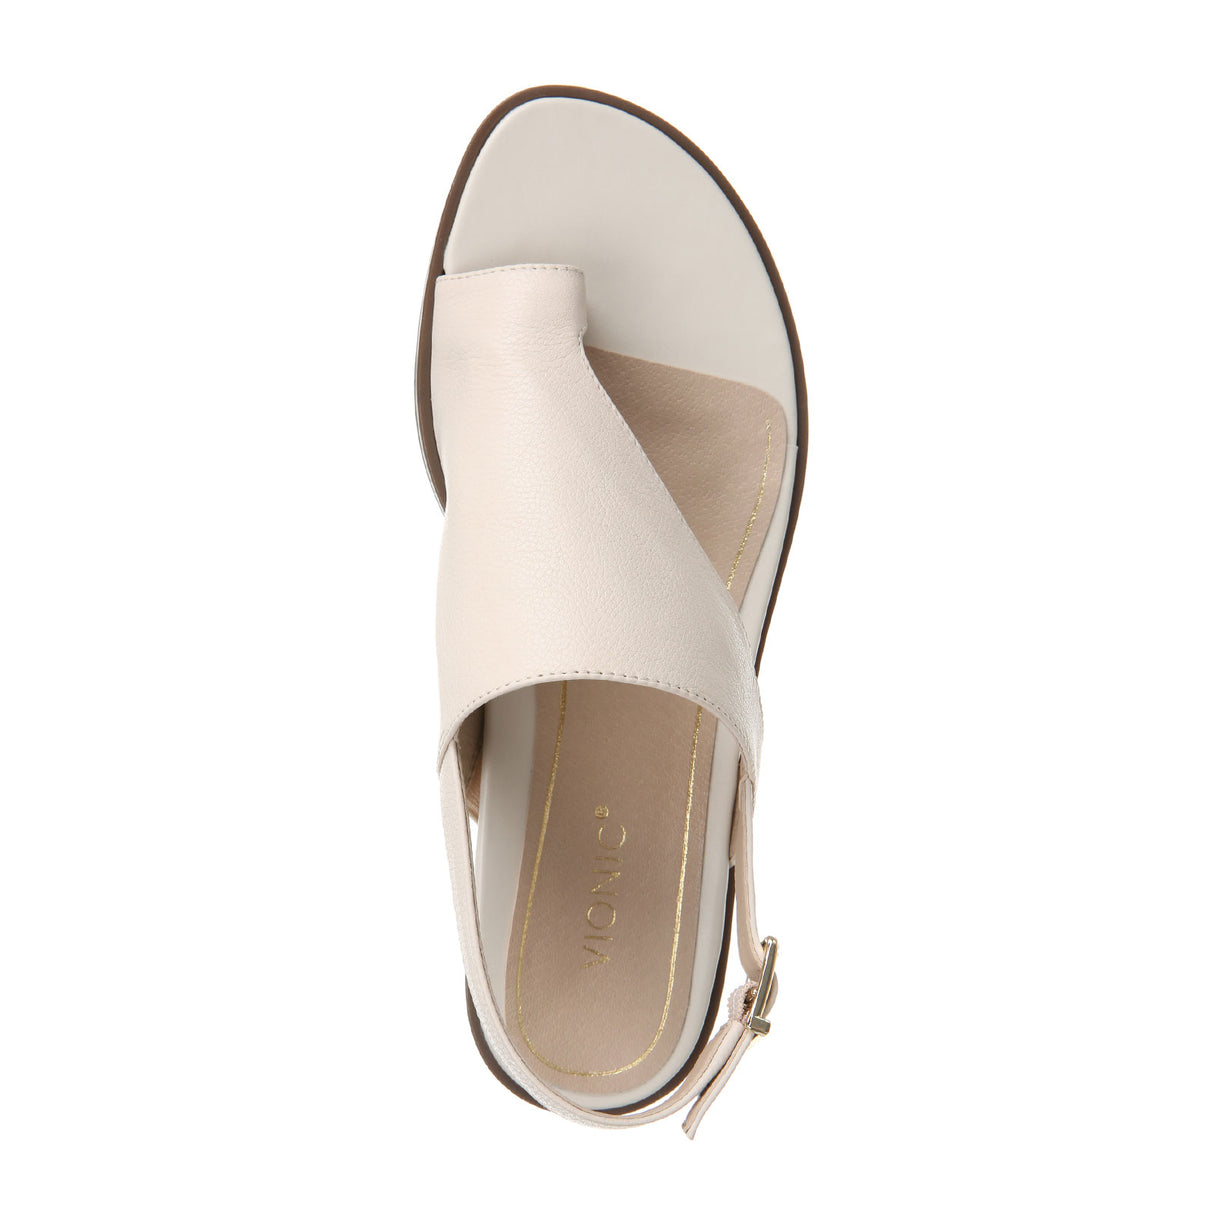 Vionic Ella Thong Sandal (Women) - Cream Sandals - Backstrap - The Heel Shoe Fitters